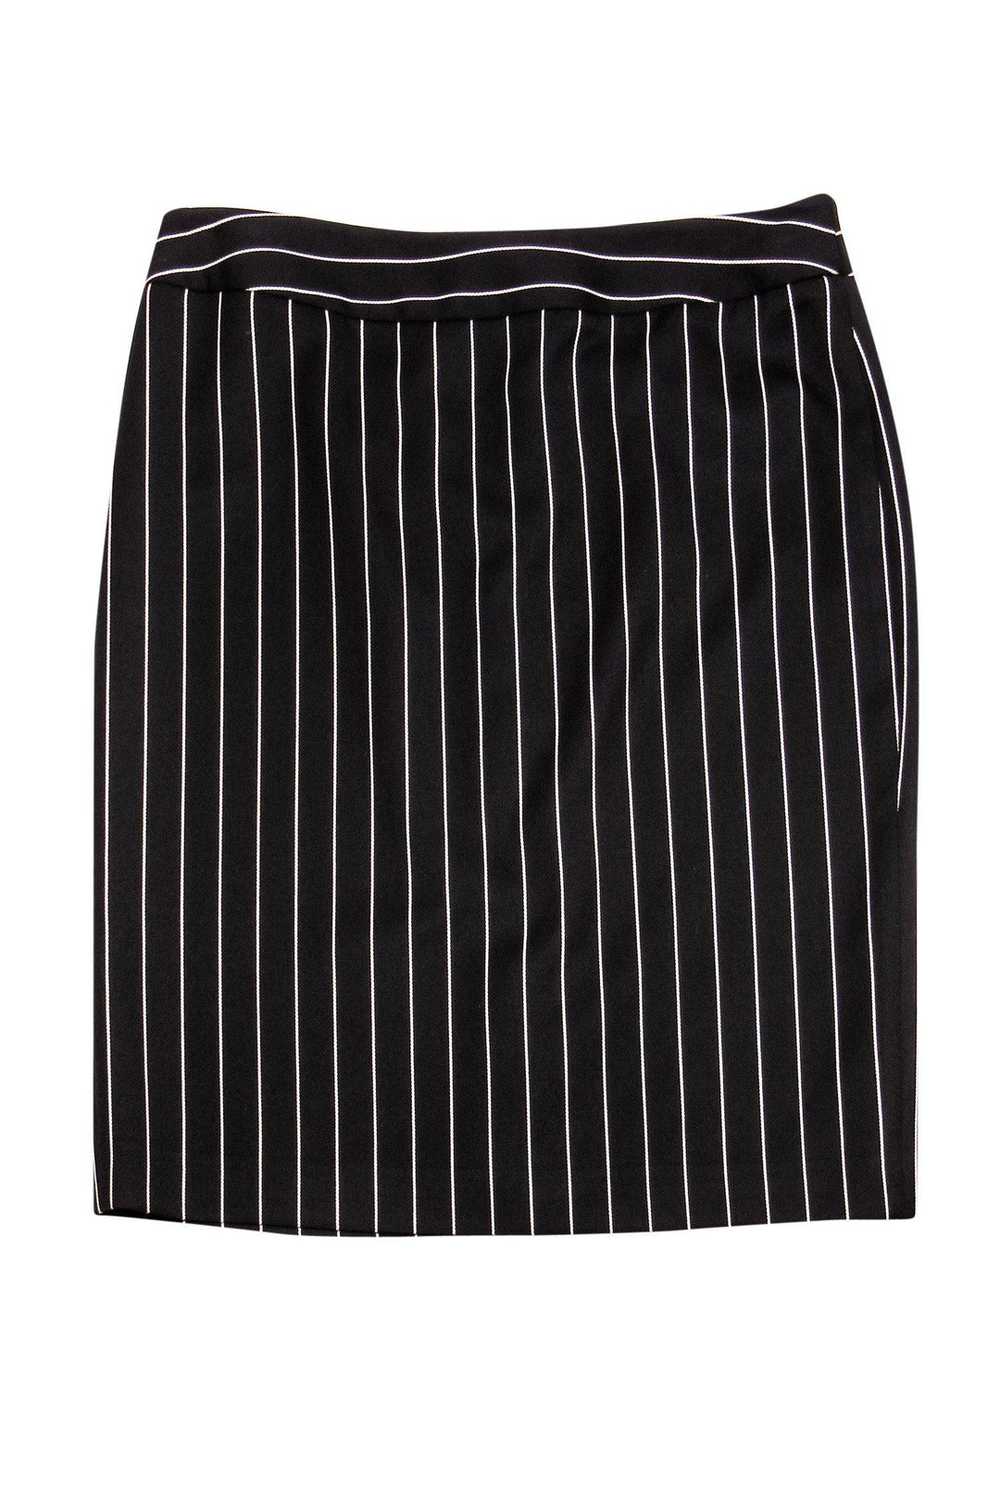 Armani Collezioni - Black & White Pinstripe Skirt… - image 1